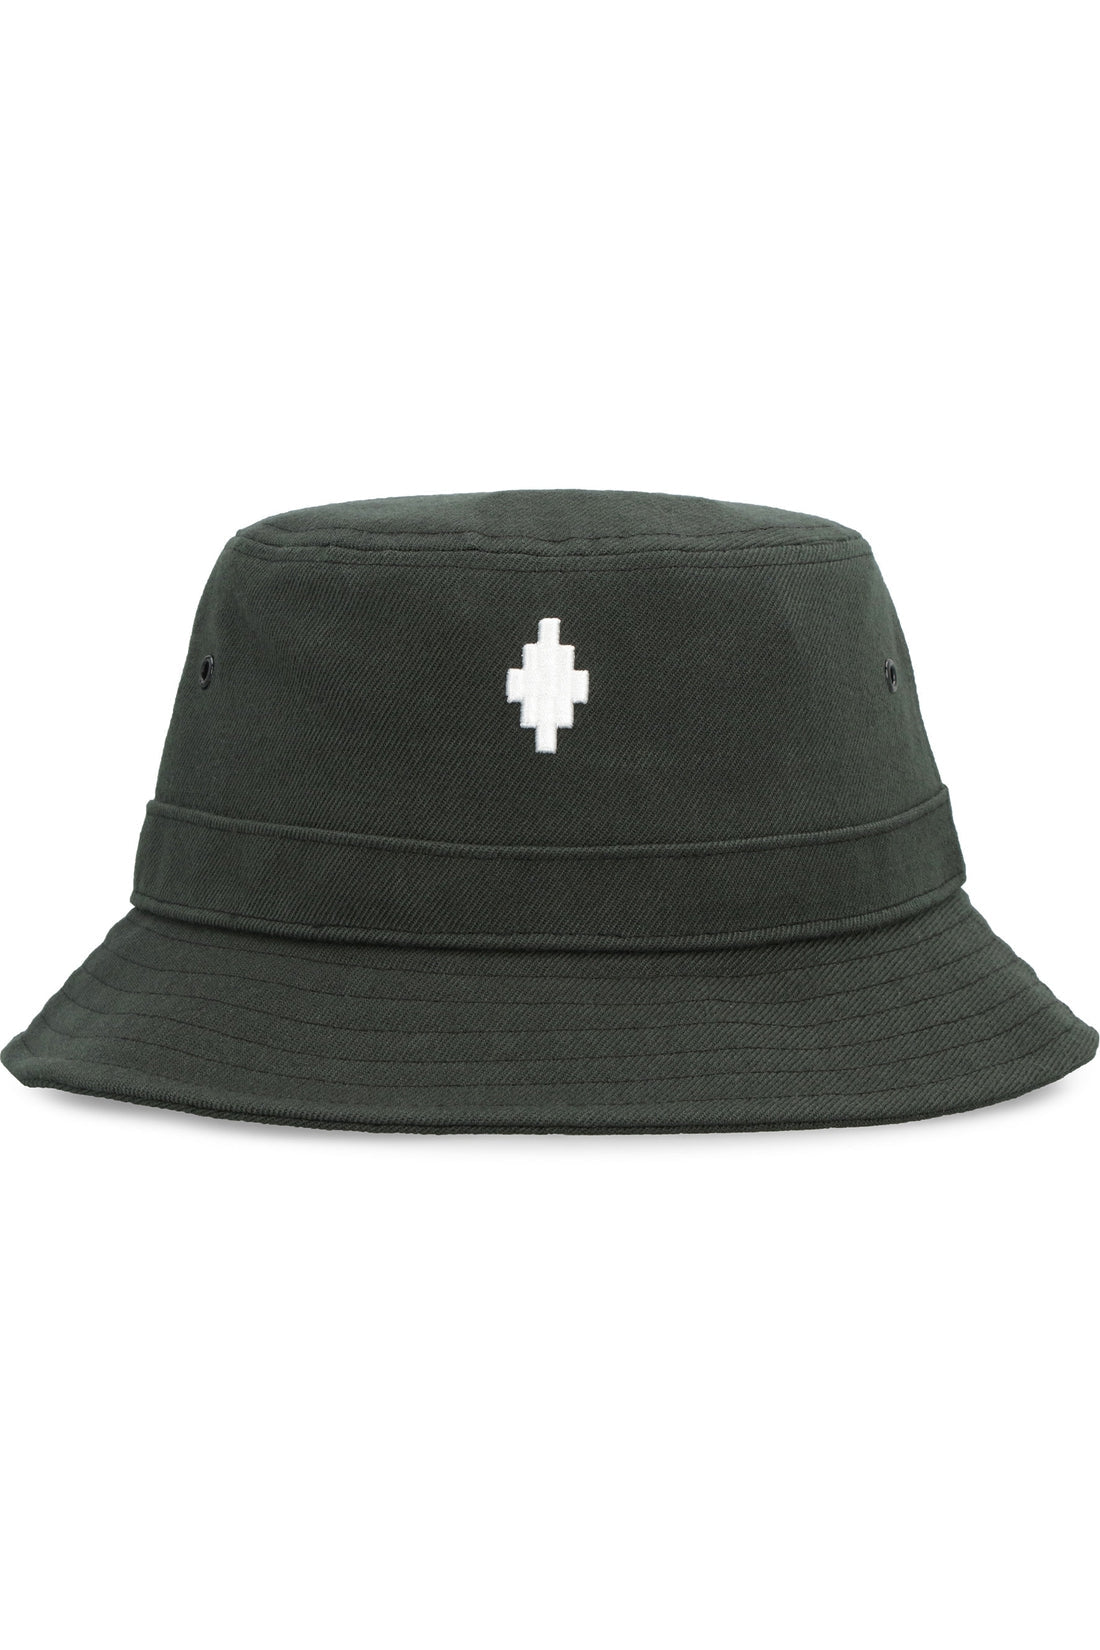 Marcelo Burlon County of Milan-OUTLET-SALE-Cross bucket hat-ARCHIVIST